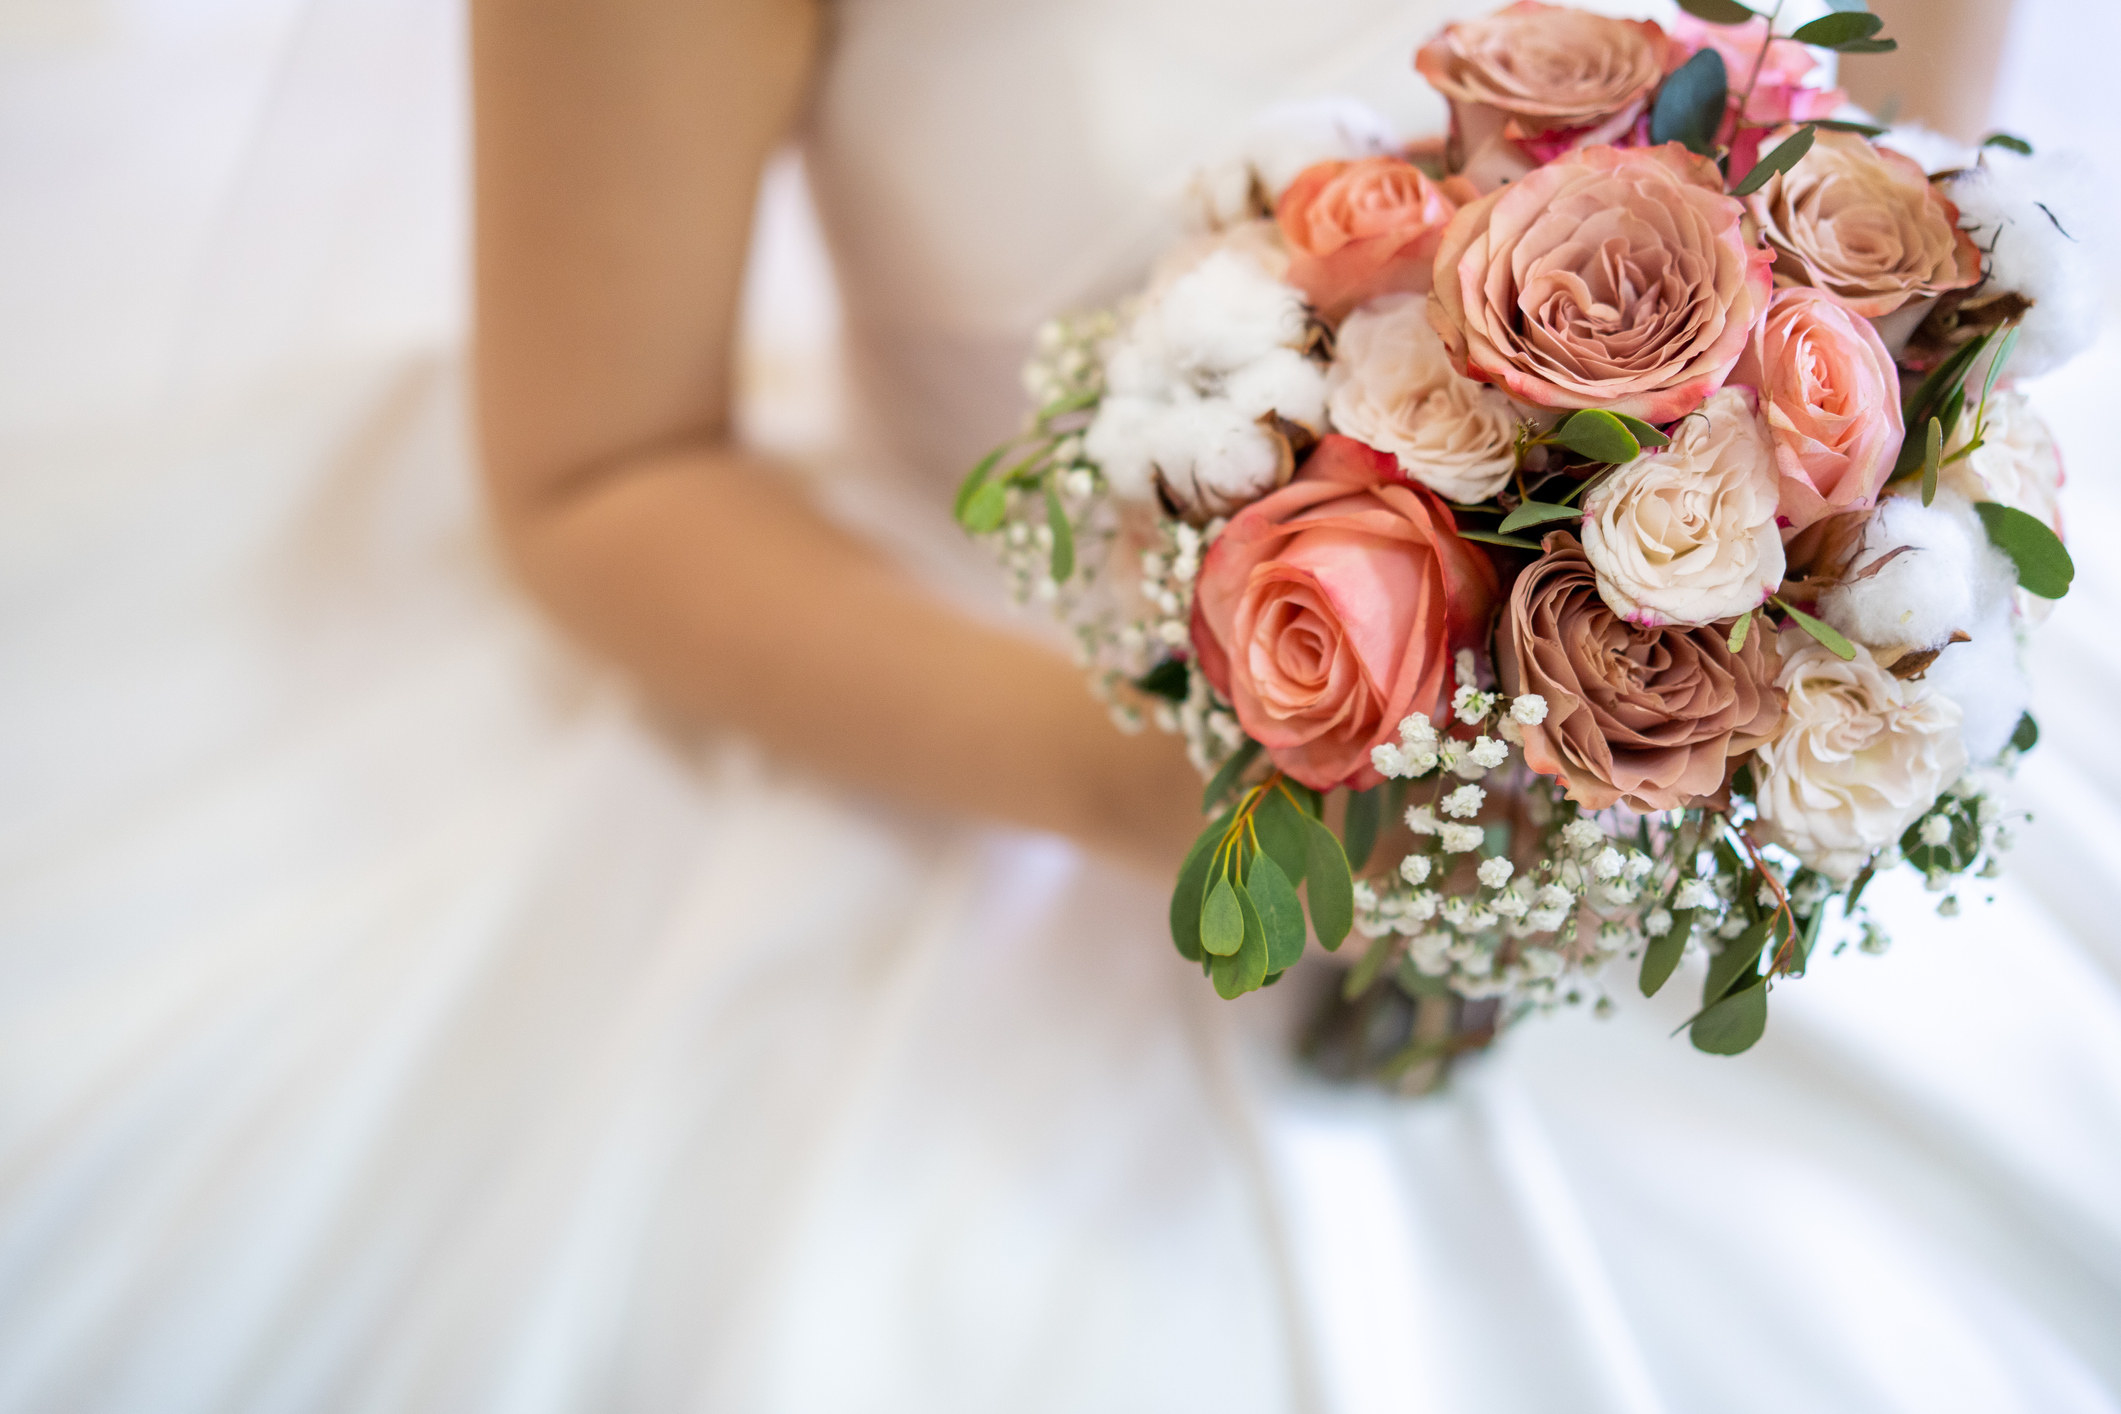 A bride holds a wedding bouquet